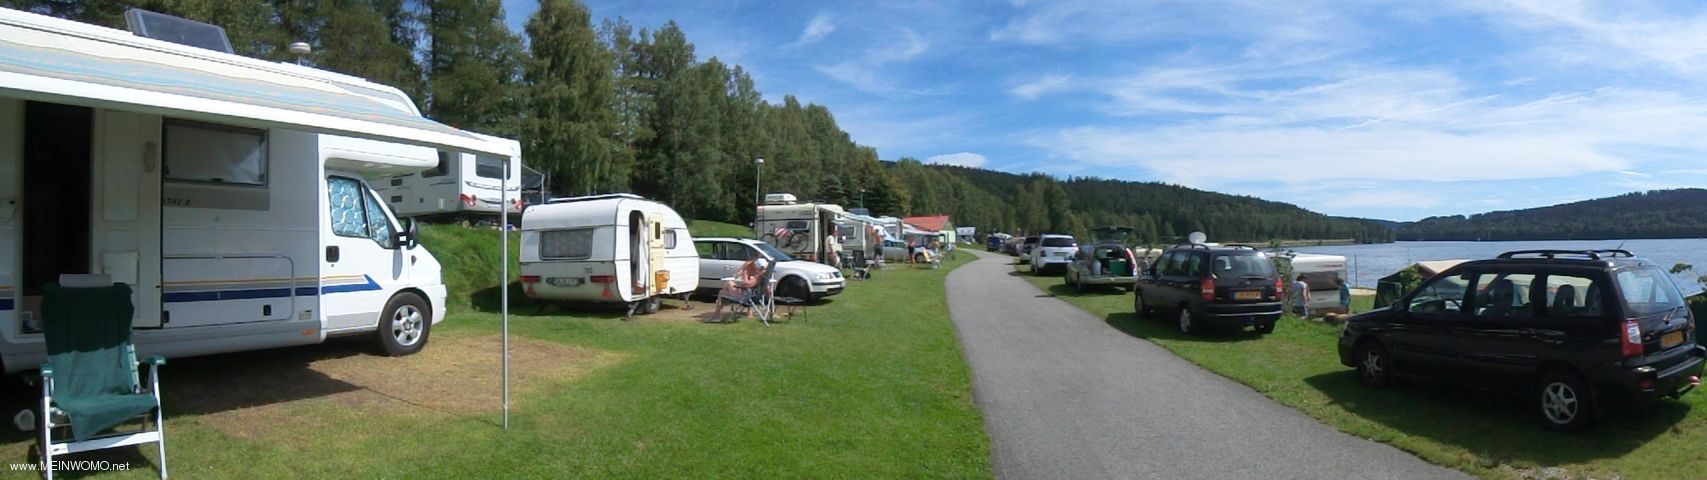 Camping Frymburk, Lipnostausee, Tschechien, August 2011